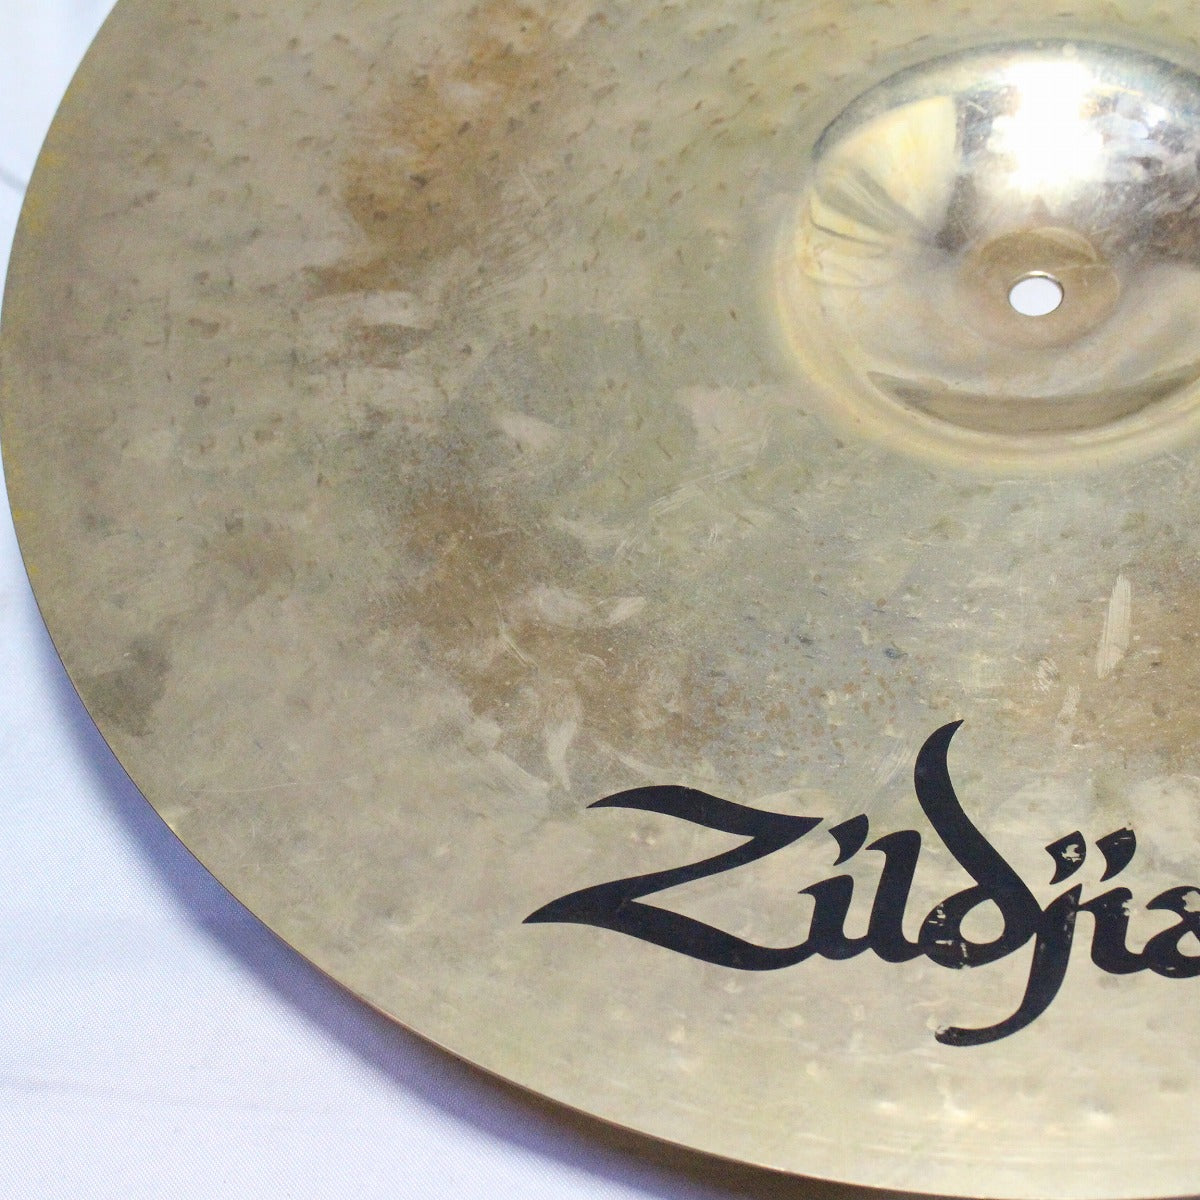 USED ZILDJIAN / K.CUSTOM 20inch MEDIUM RIDE 2646g Zildjian Ride Cymbal [08]